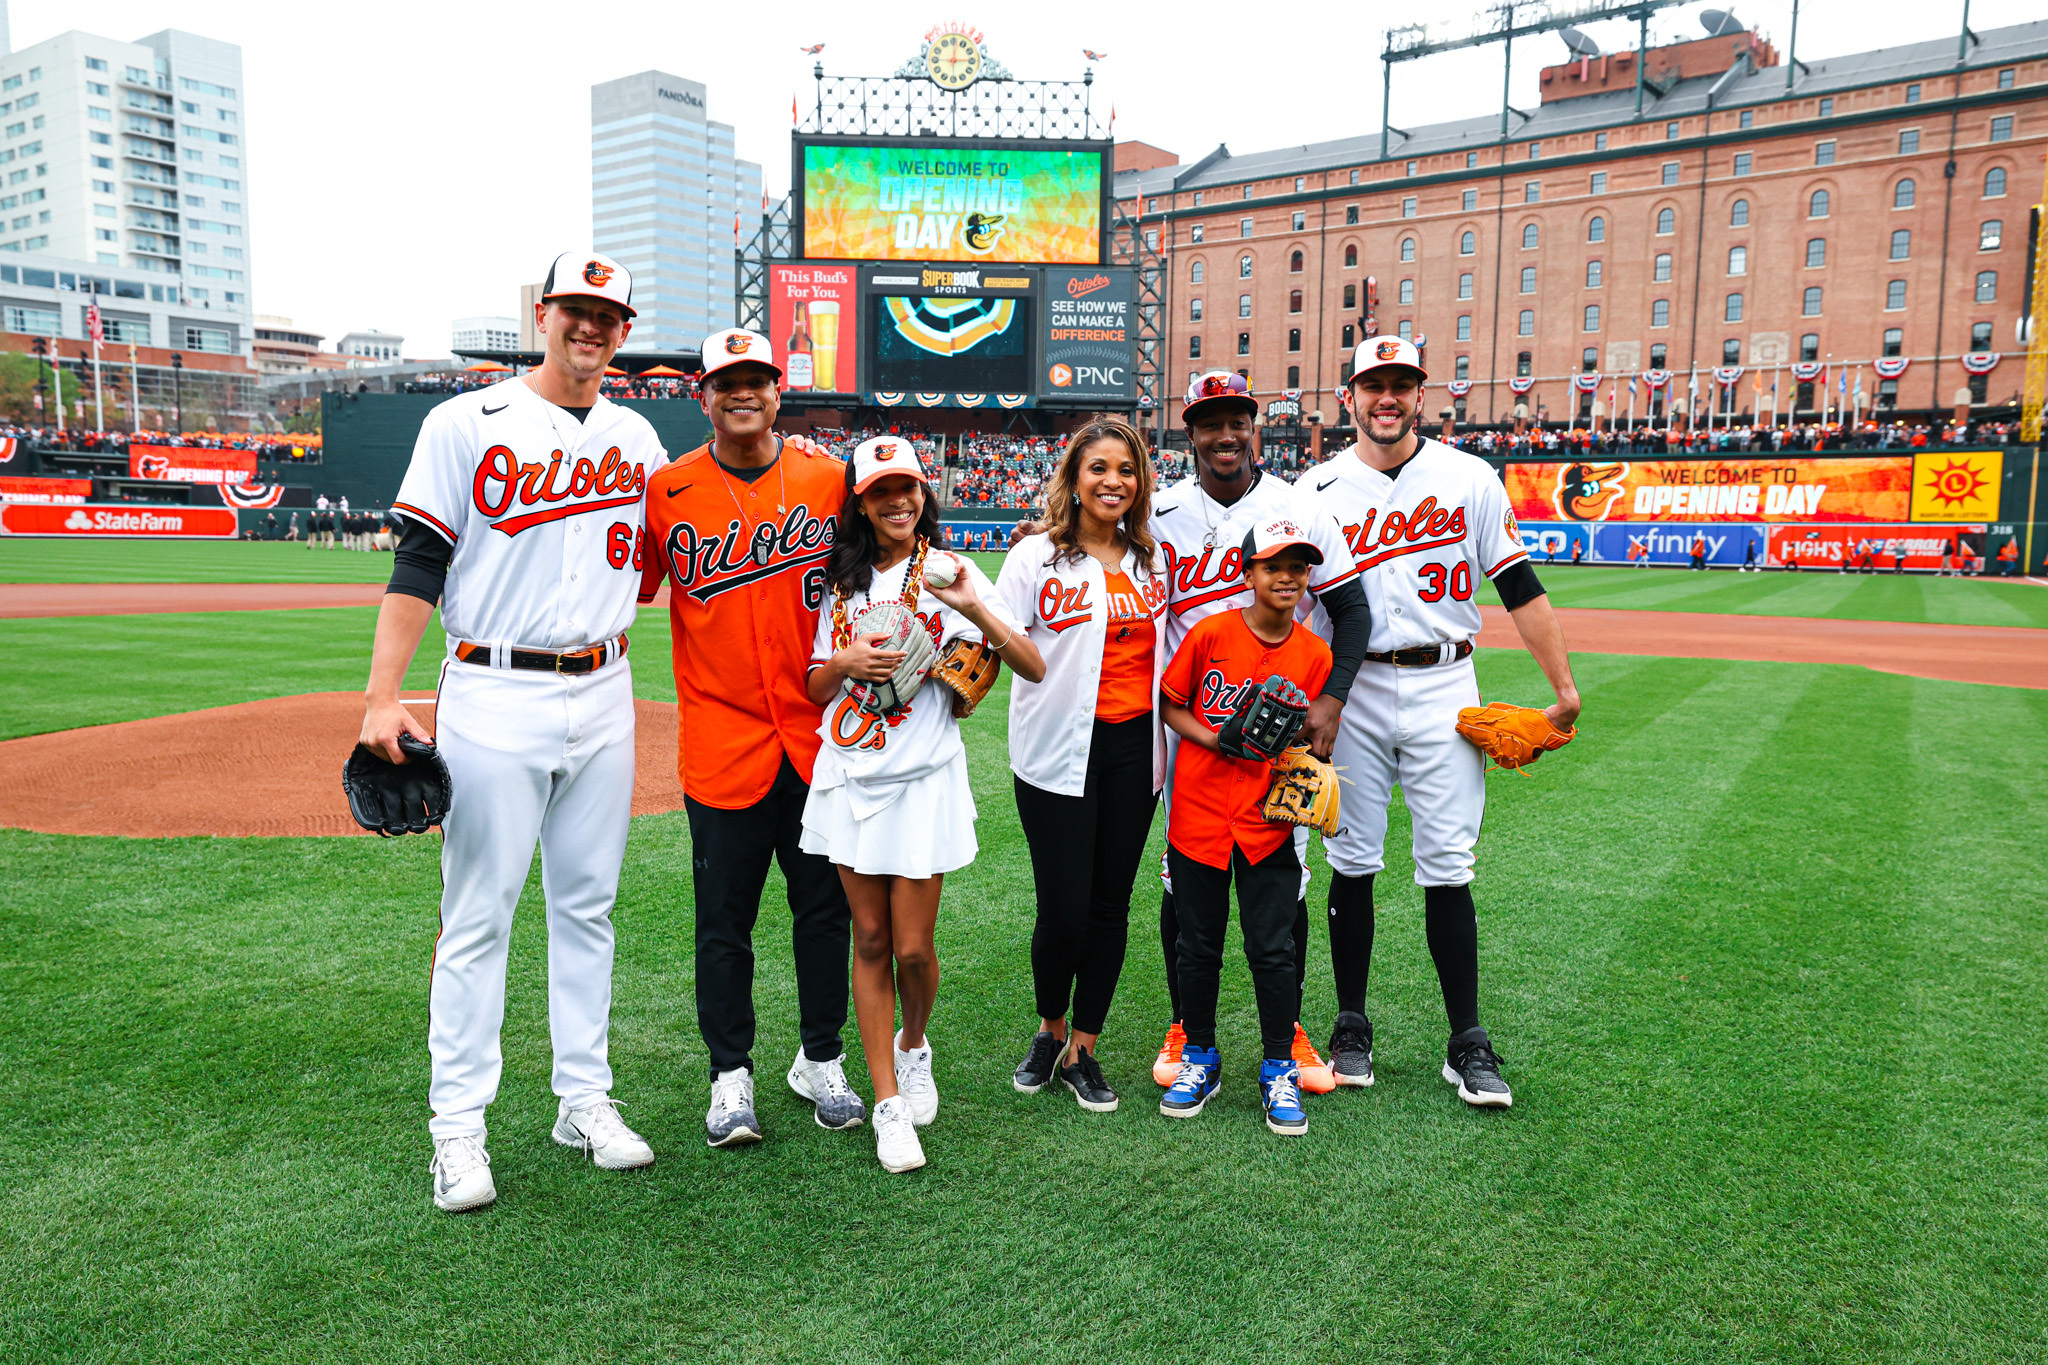 Baltimore Orioles celebrate 30th anniversary of Camden Yards